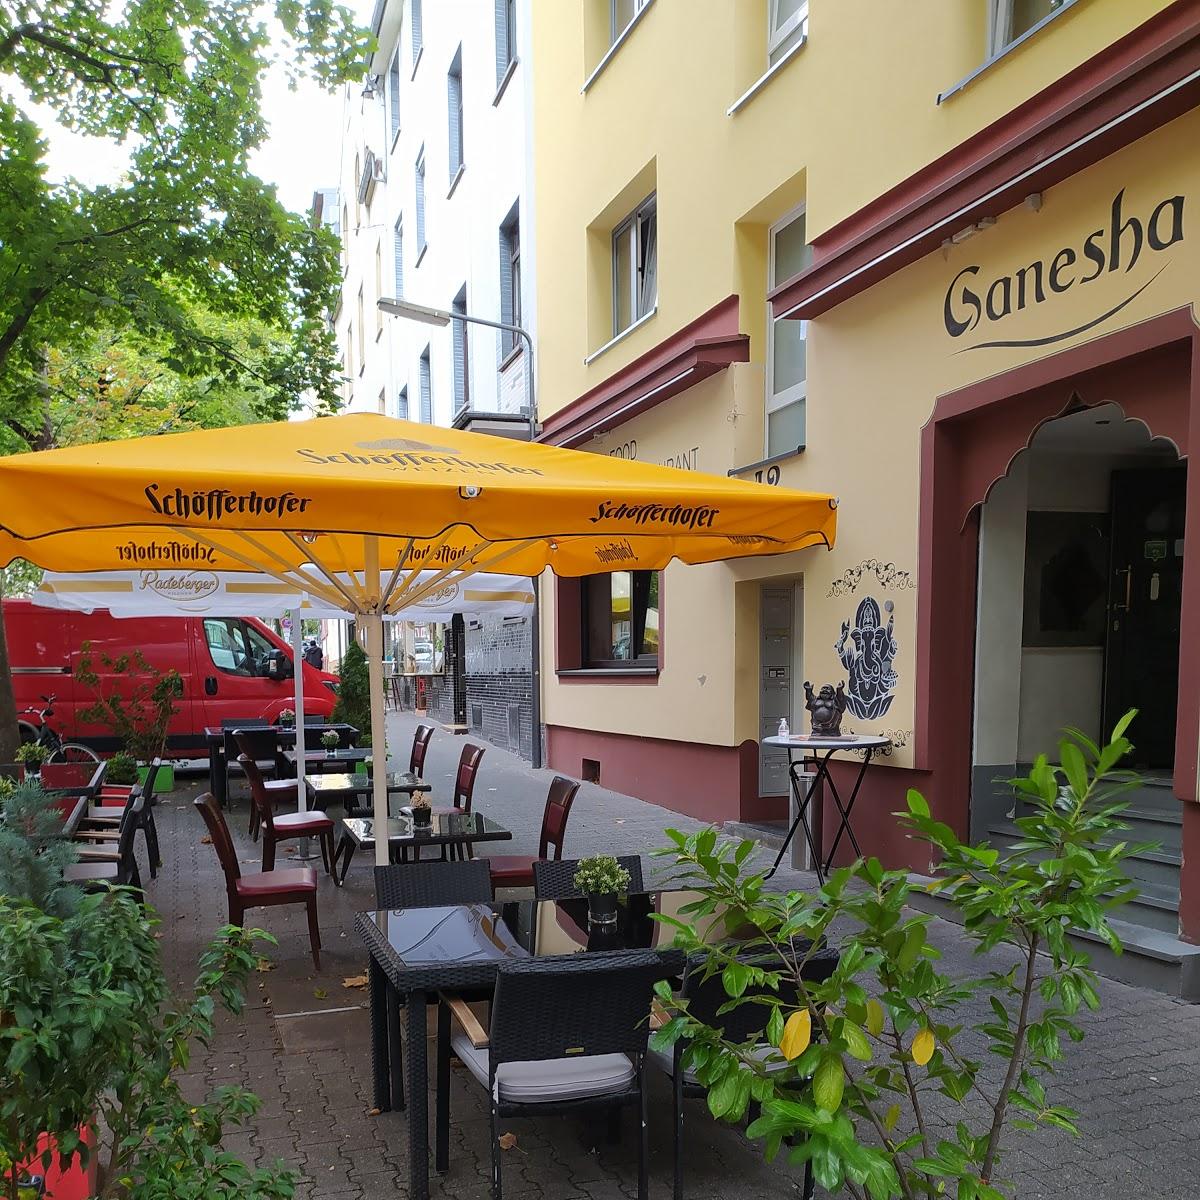 Restaurant "Ganesha Tandoori Frankfurt" in Frankfurt am Main